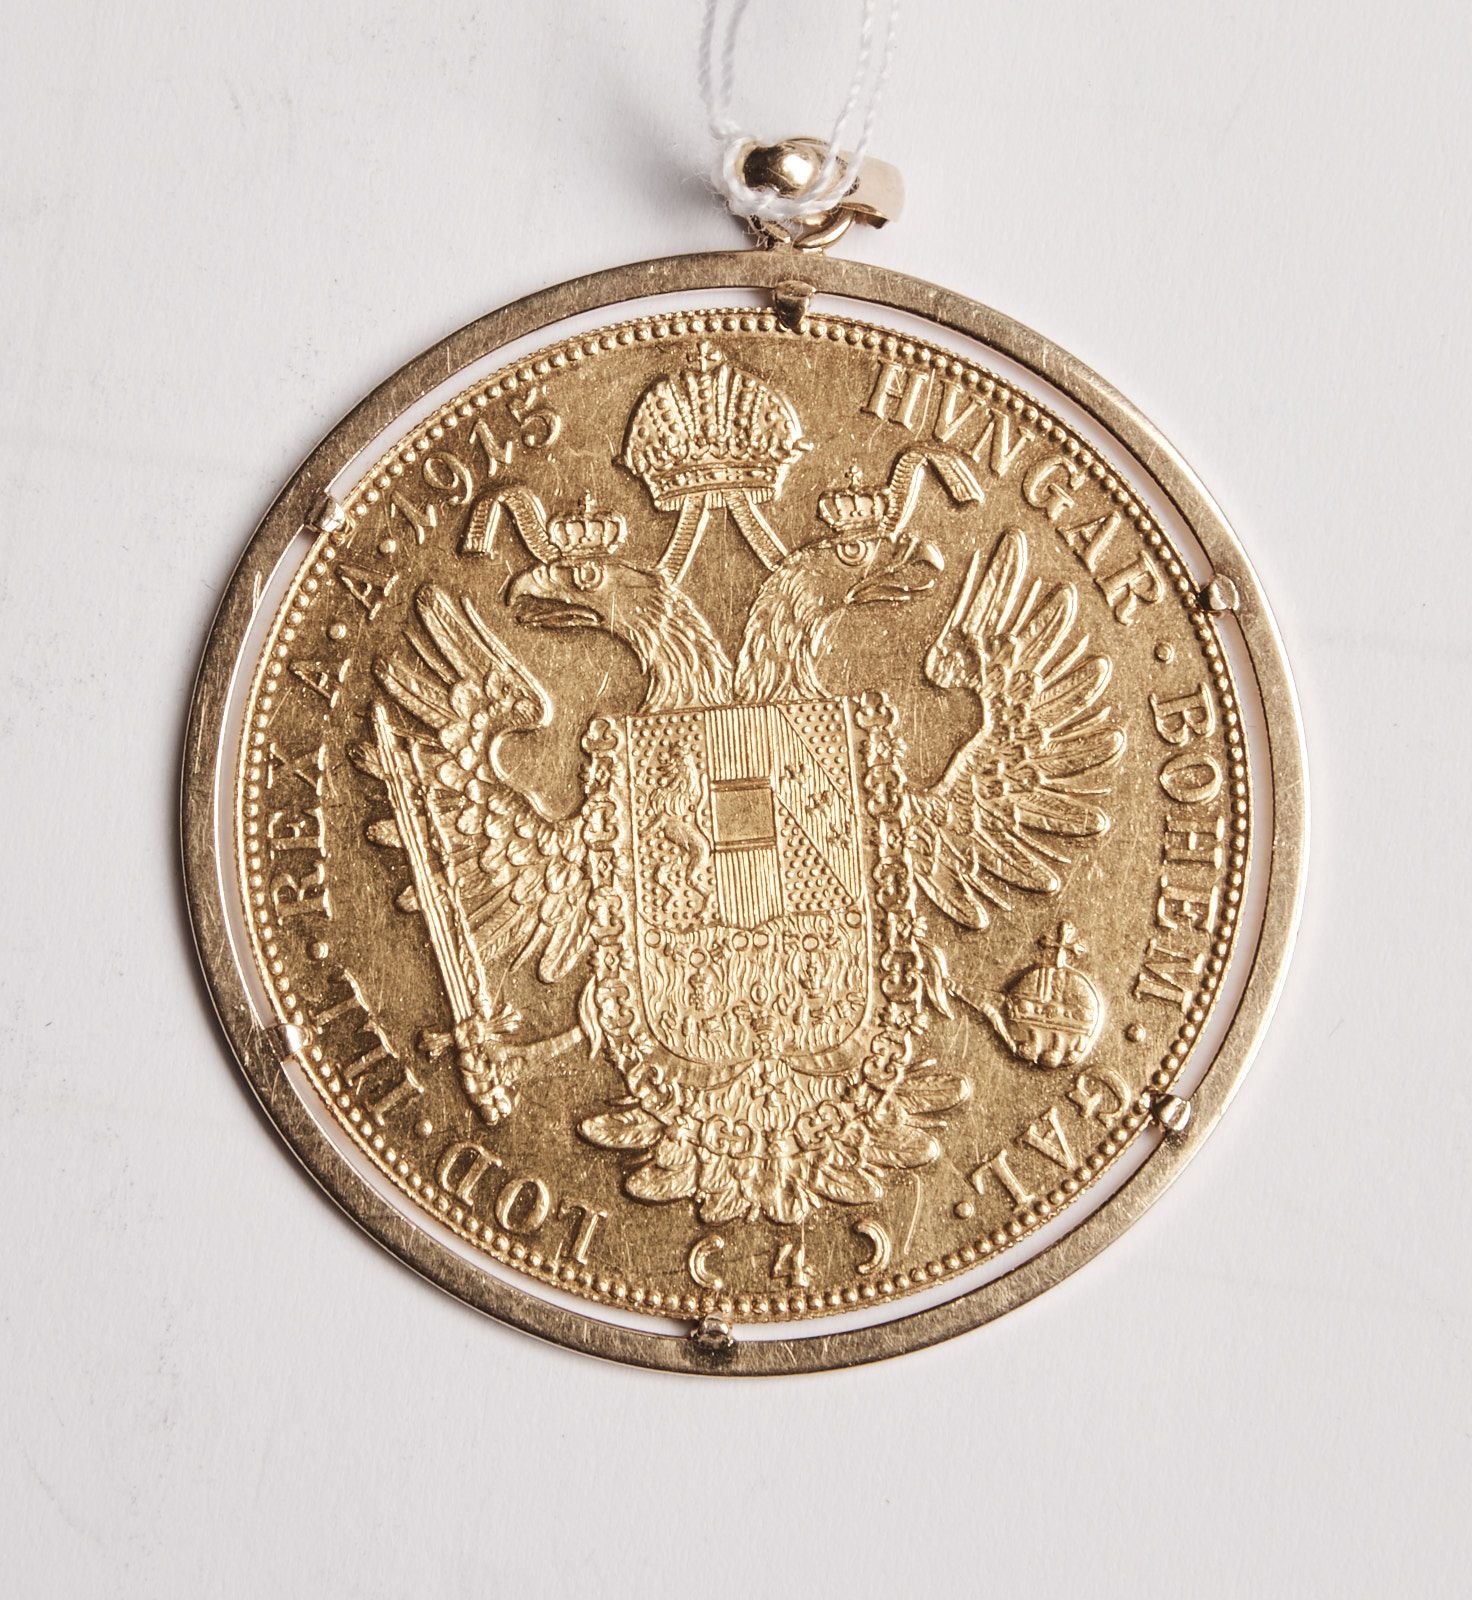 Null 40 4-Dukaten-Münze 1915, Gold montiert, Gewicht 17,2 g